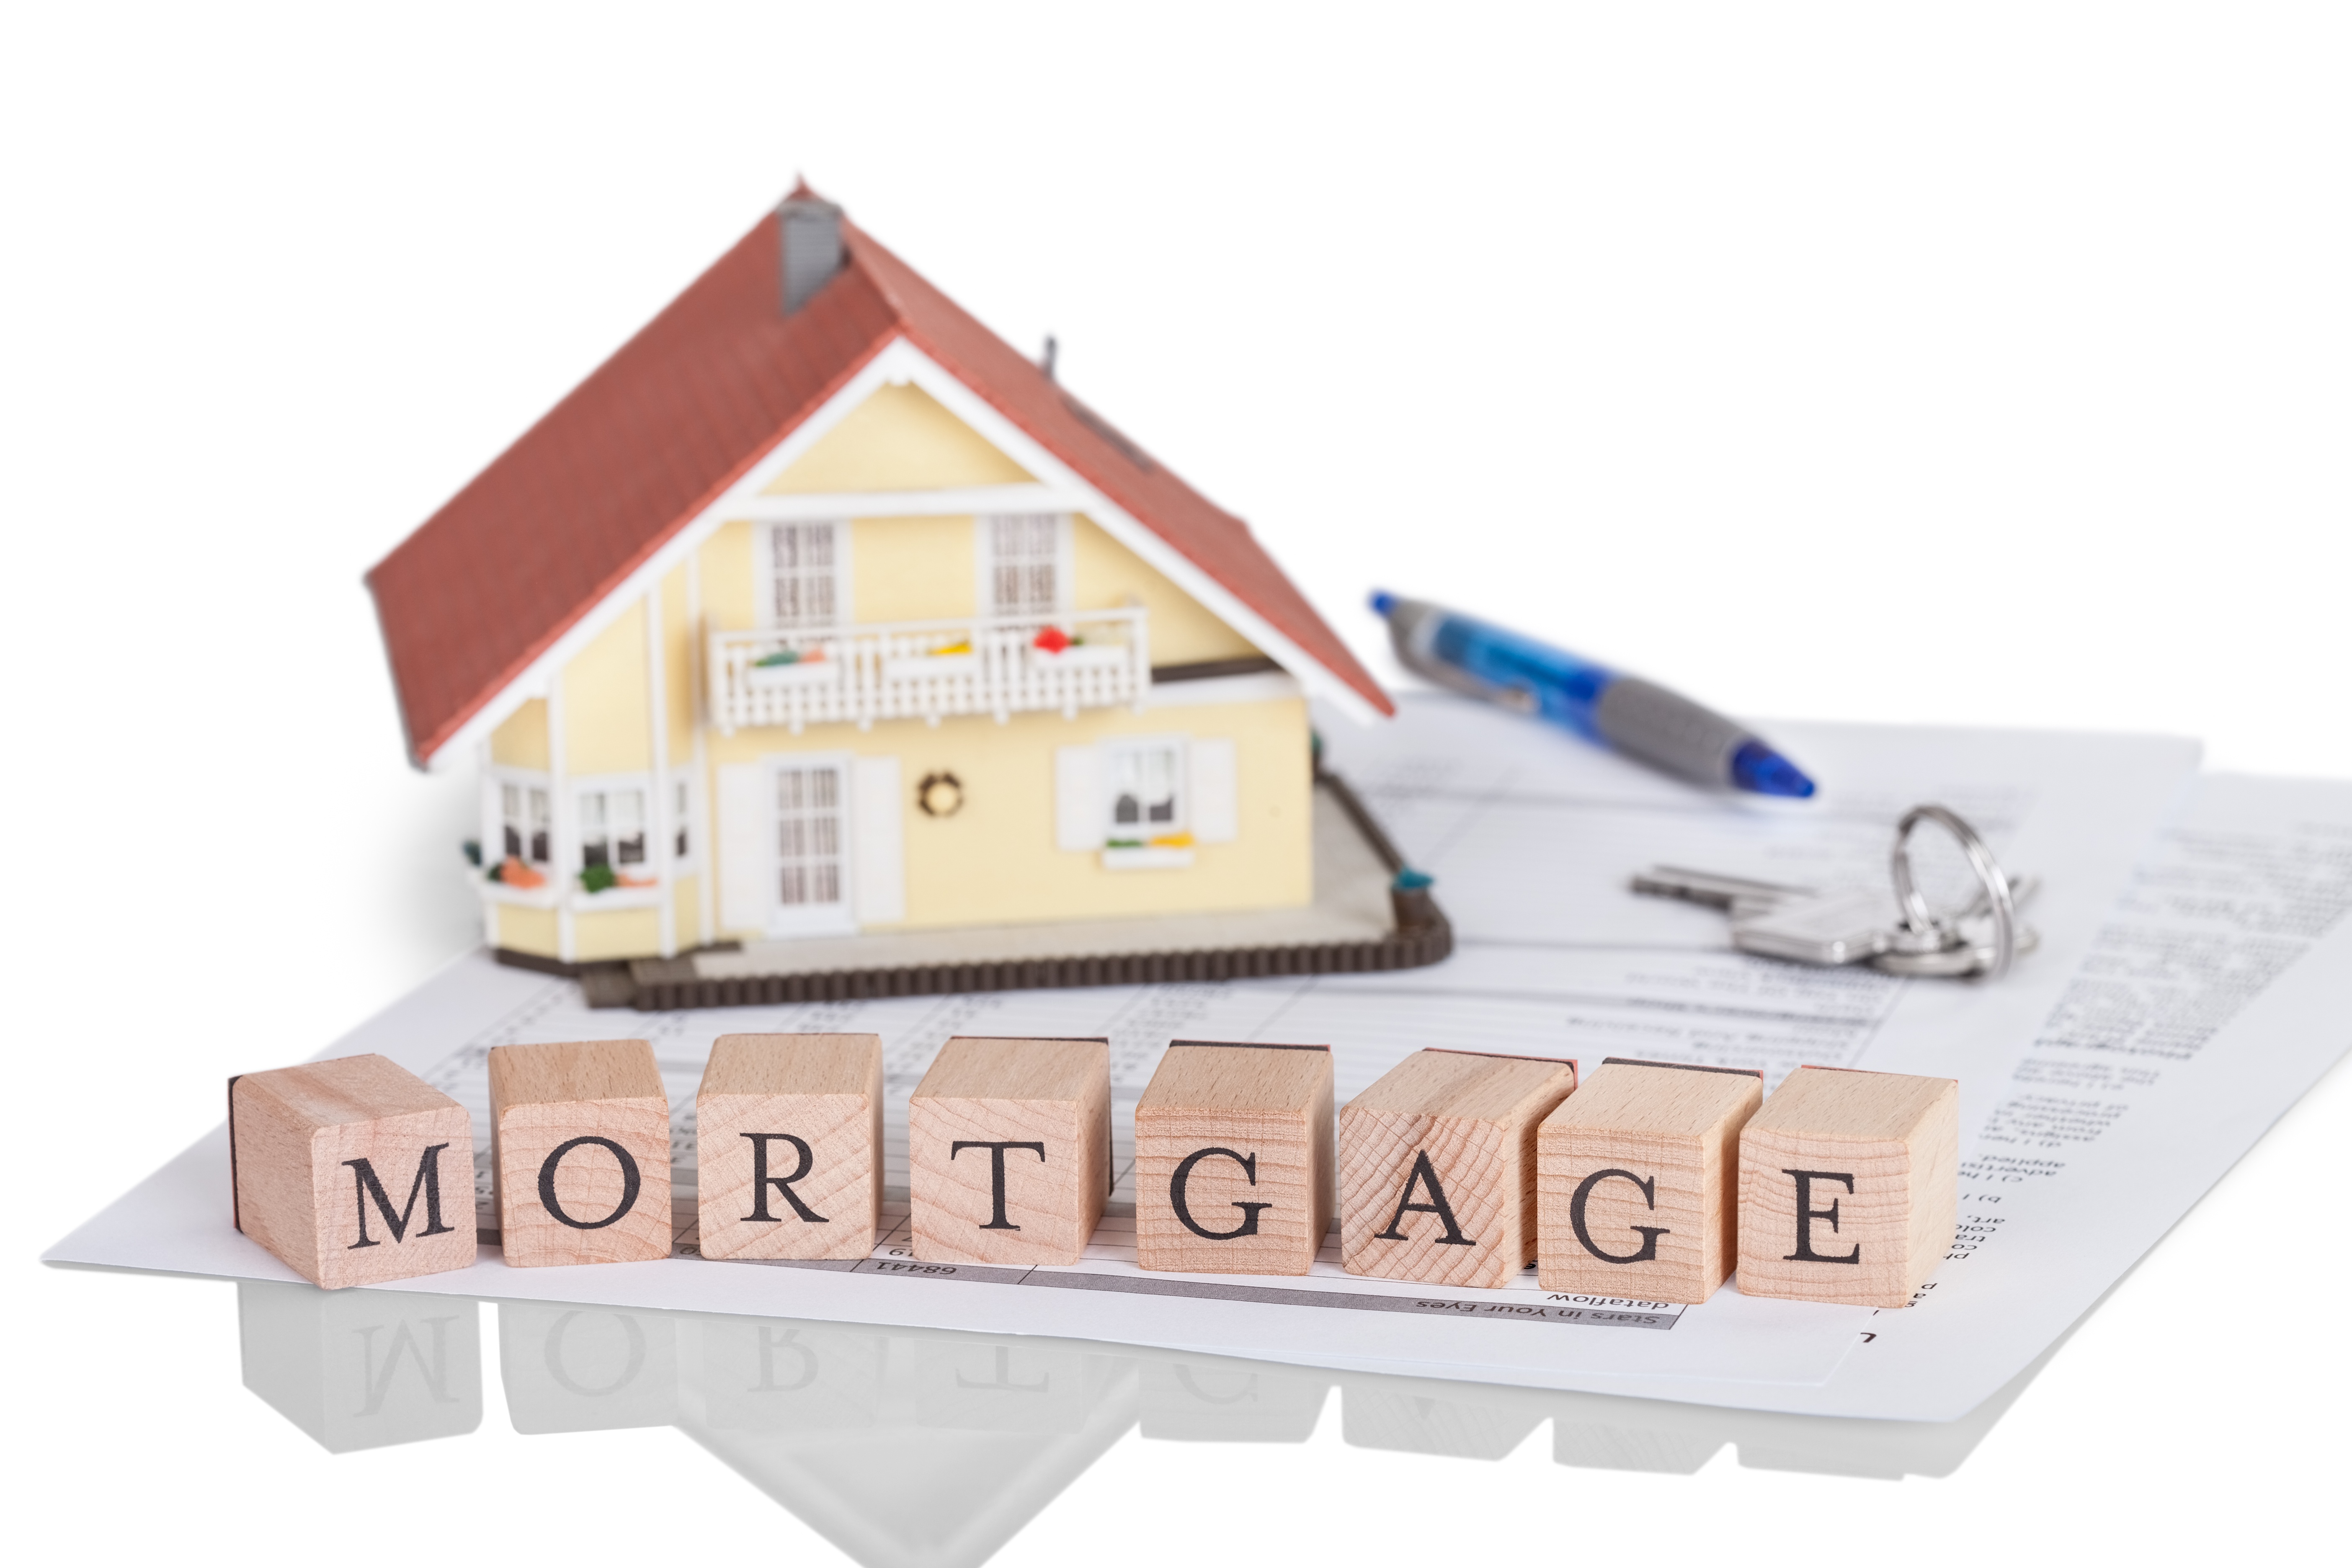 mortgage insurance